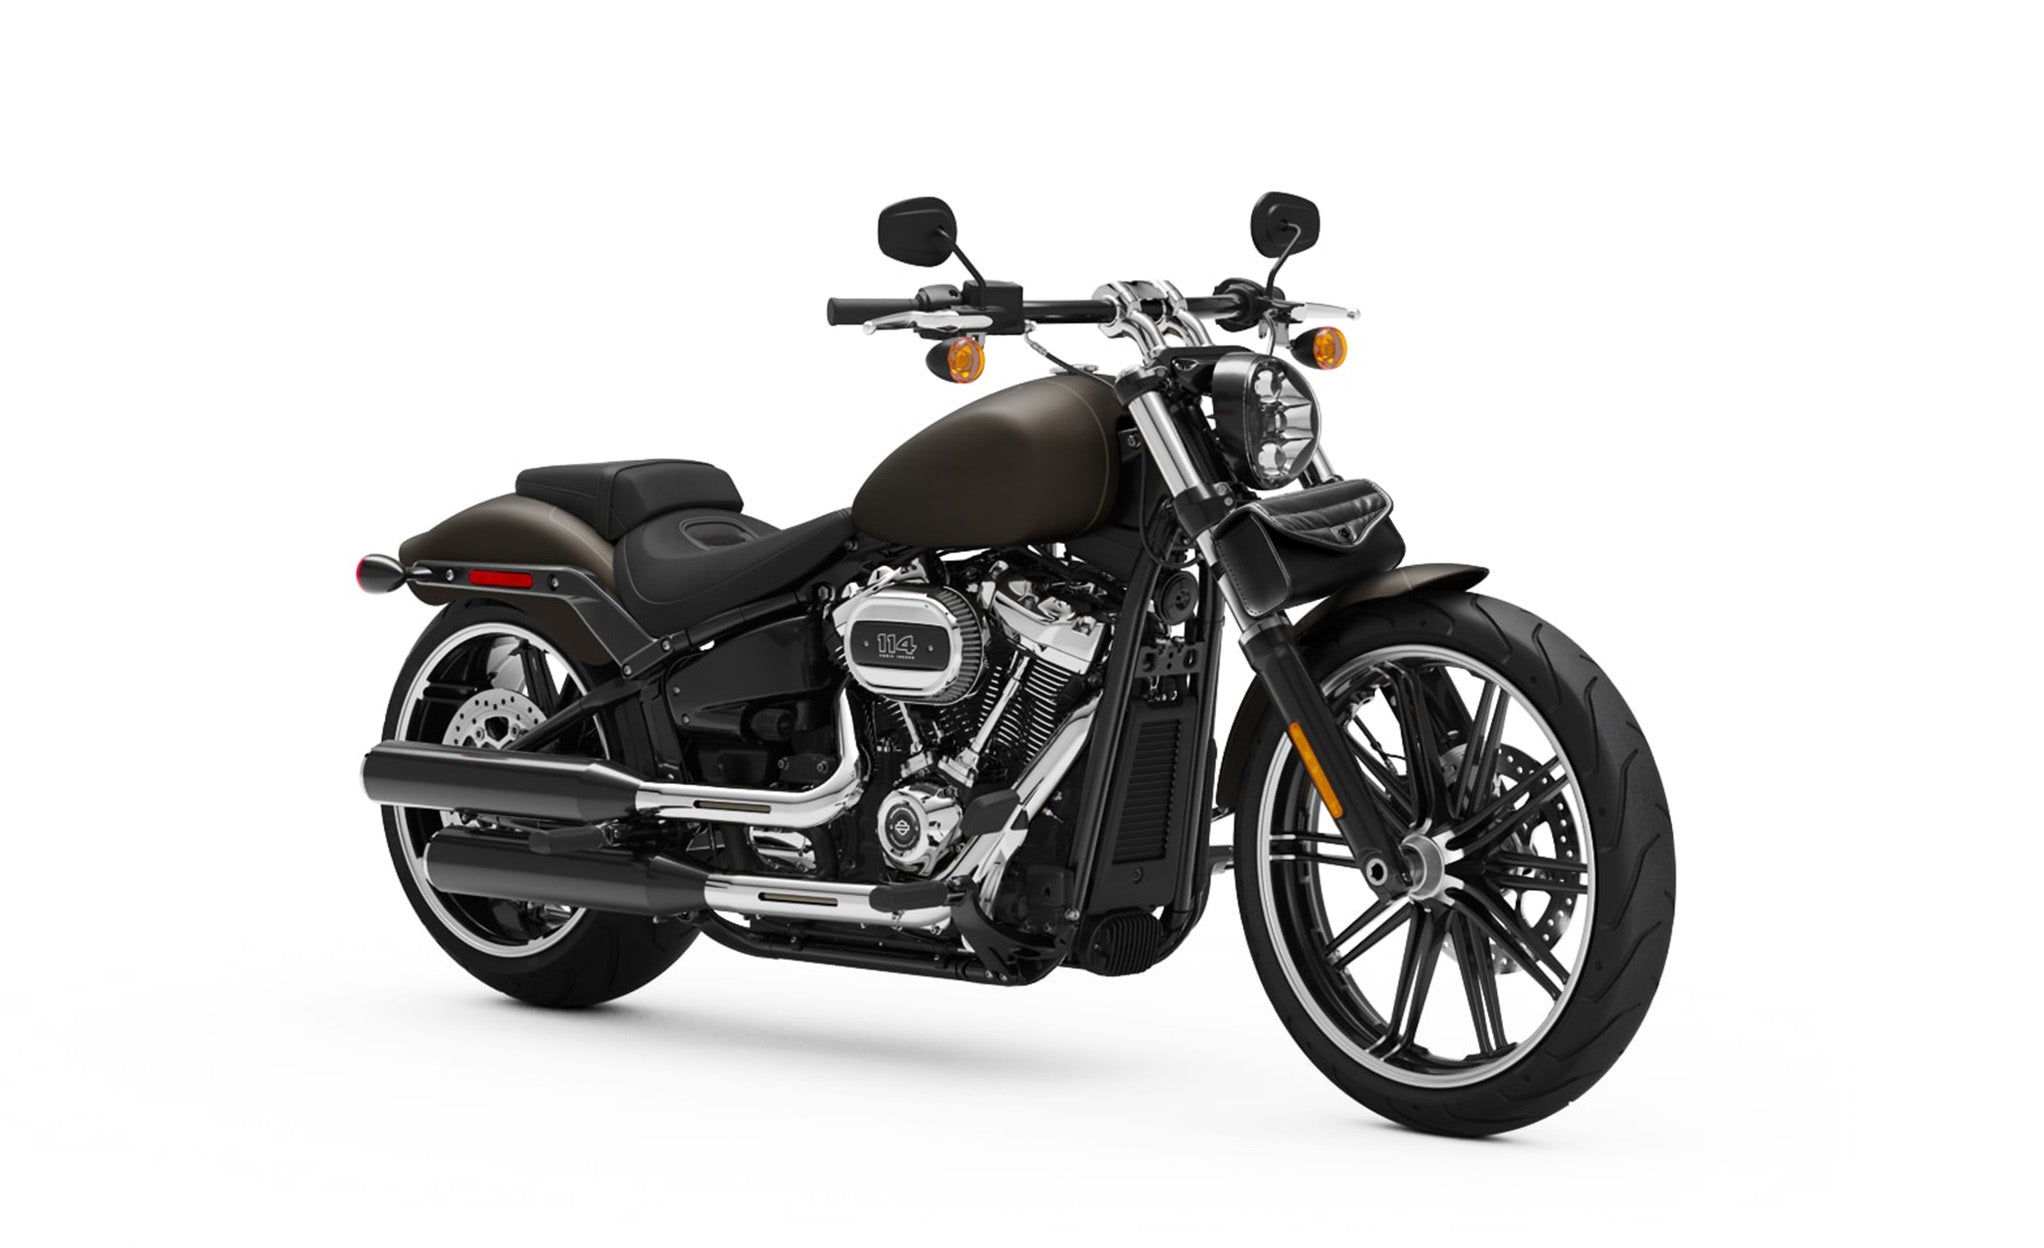 Viking Iron Born Horizontal Stitch Honda Leather Motorcycle Handlebar Bag Bag on Bike View @expand